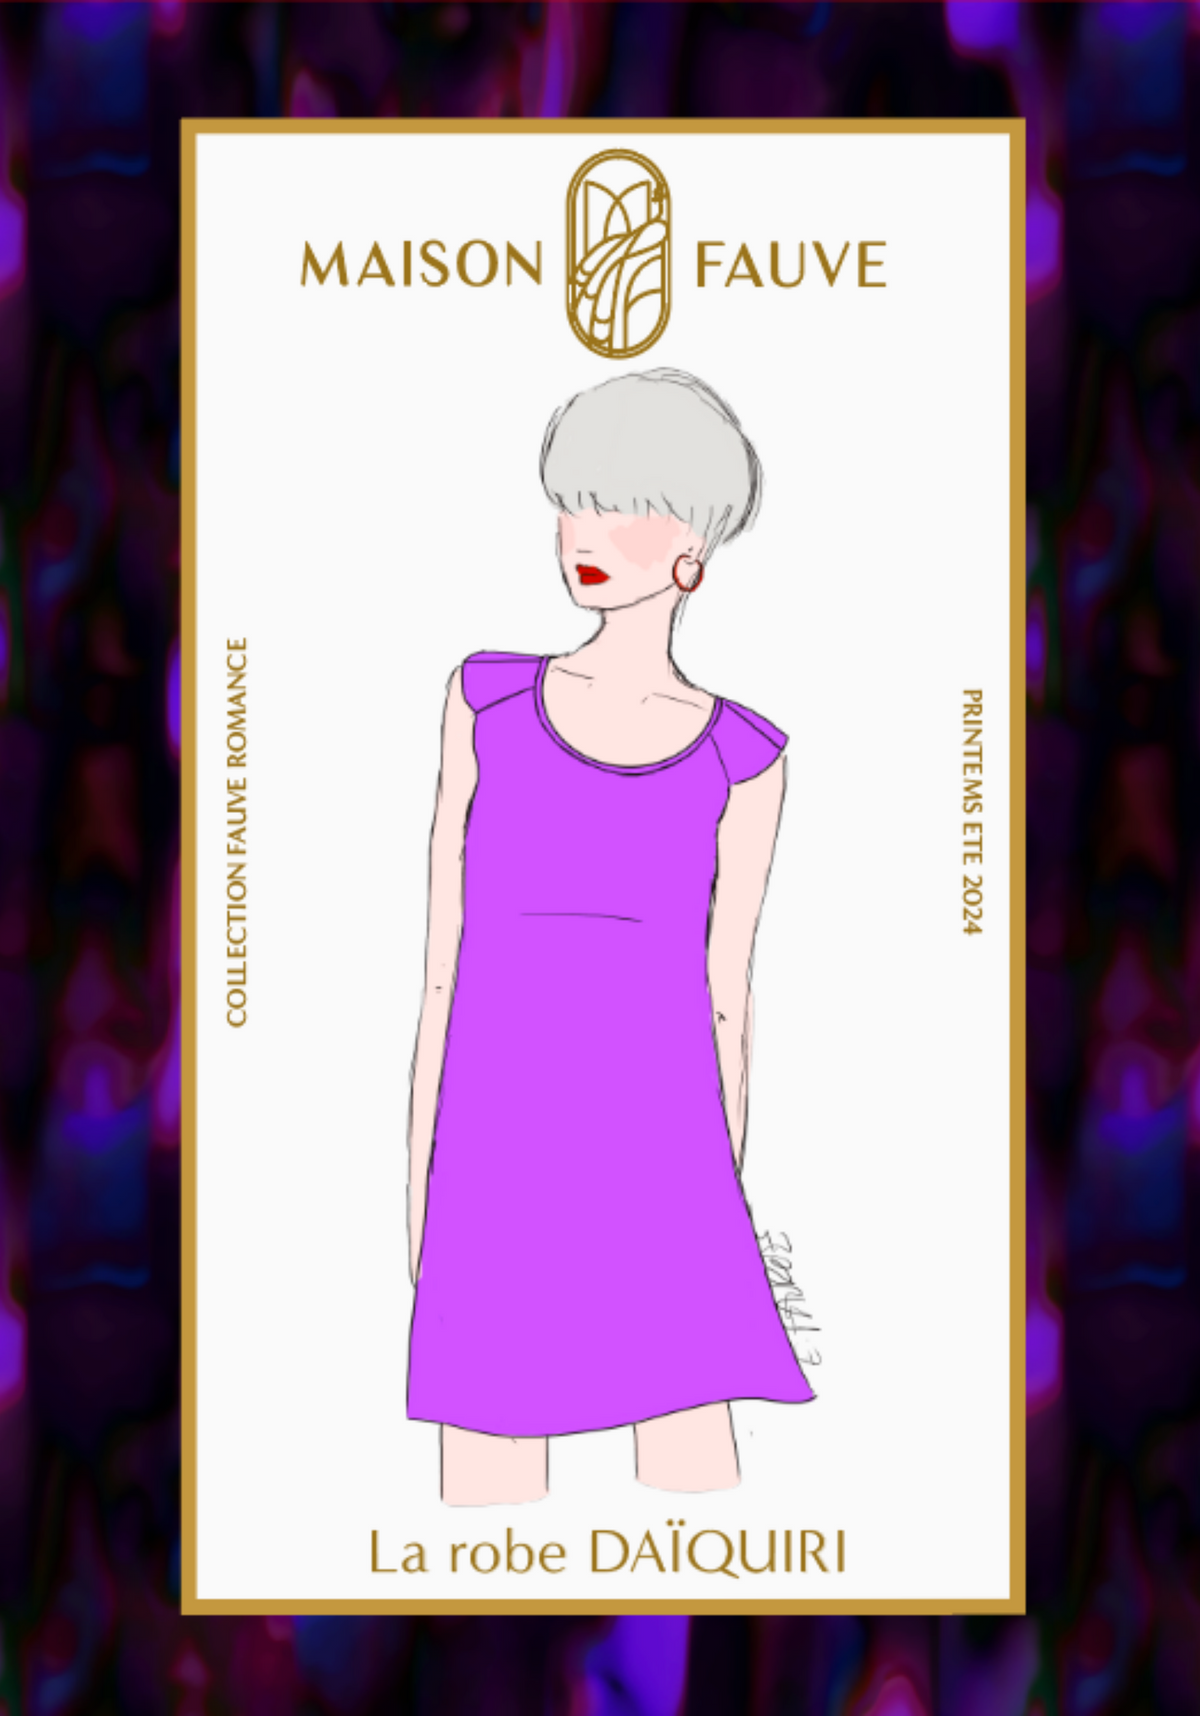 DAÏQUIRI Top/Blouse Sewing Pattern by Maison Fauve